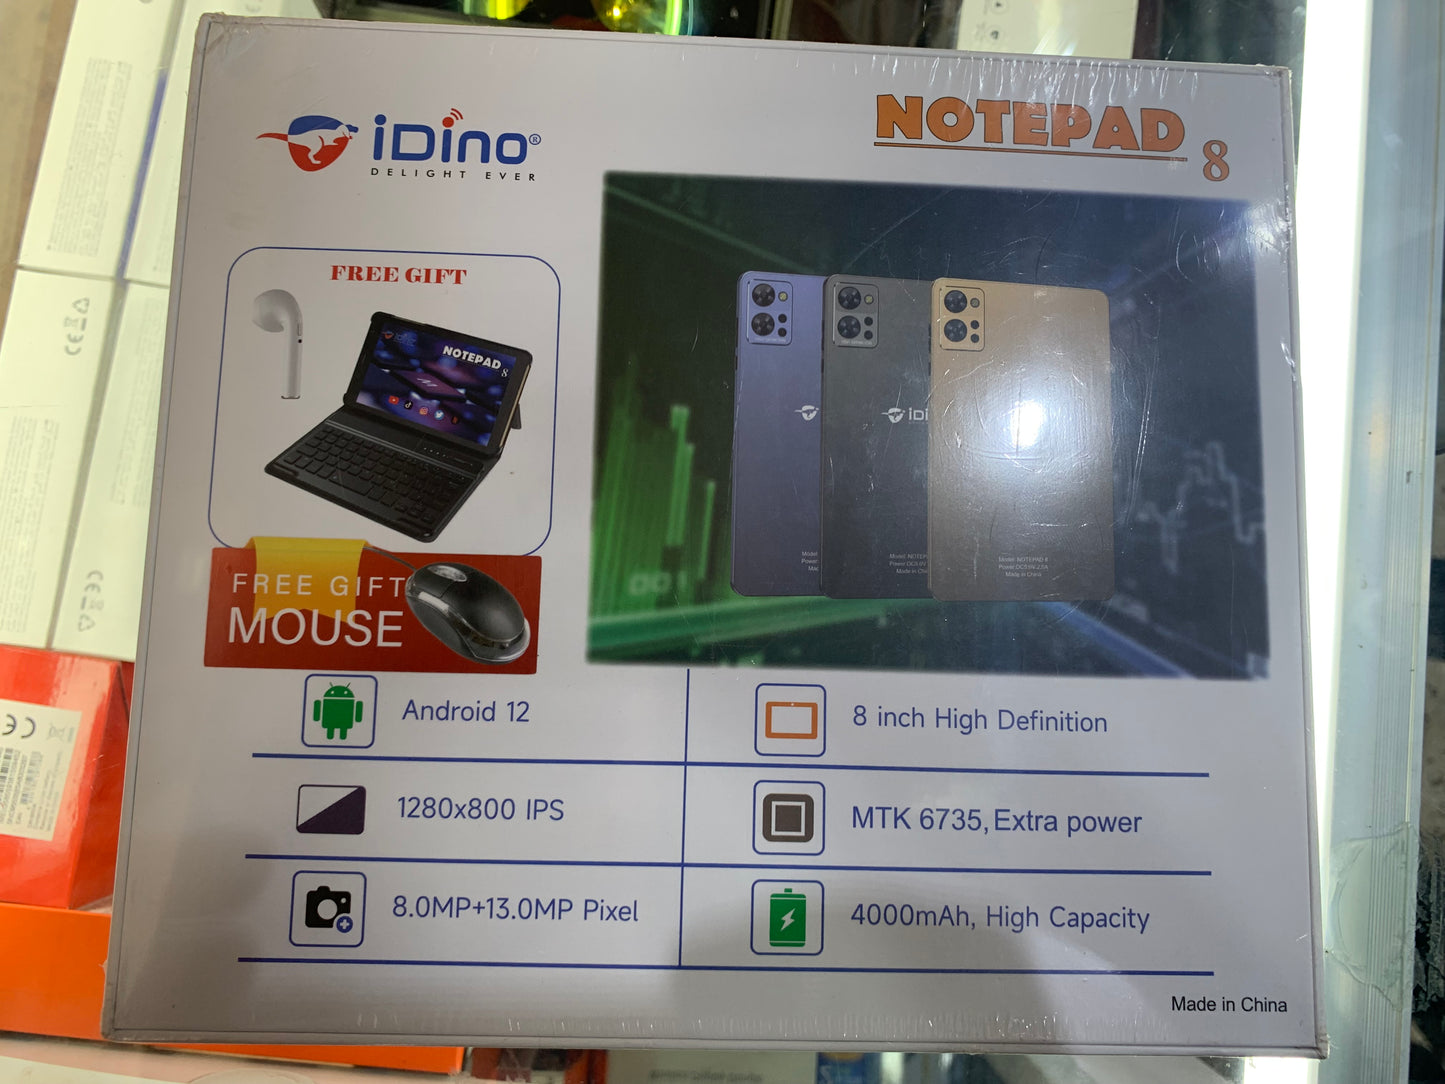 New Idino Note Pad 8 256 GB